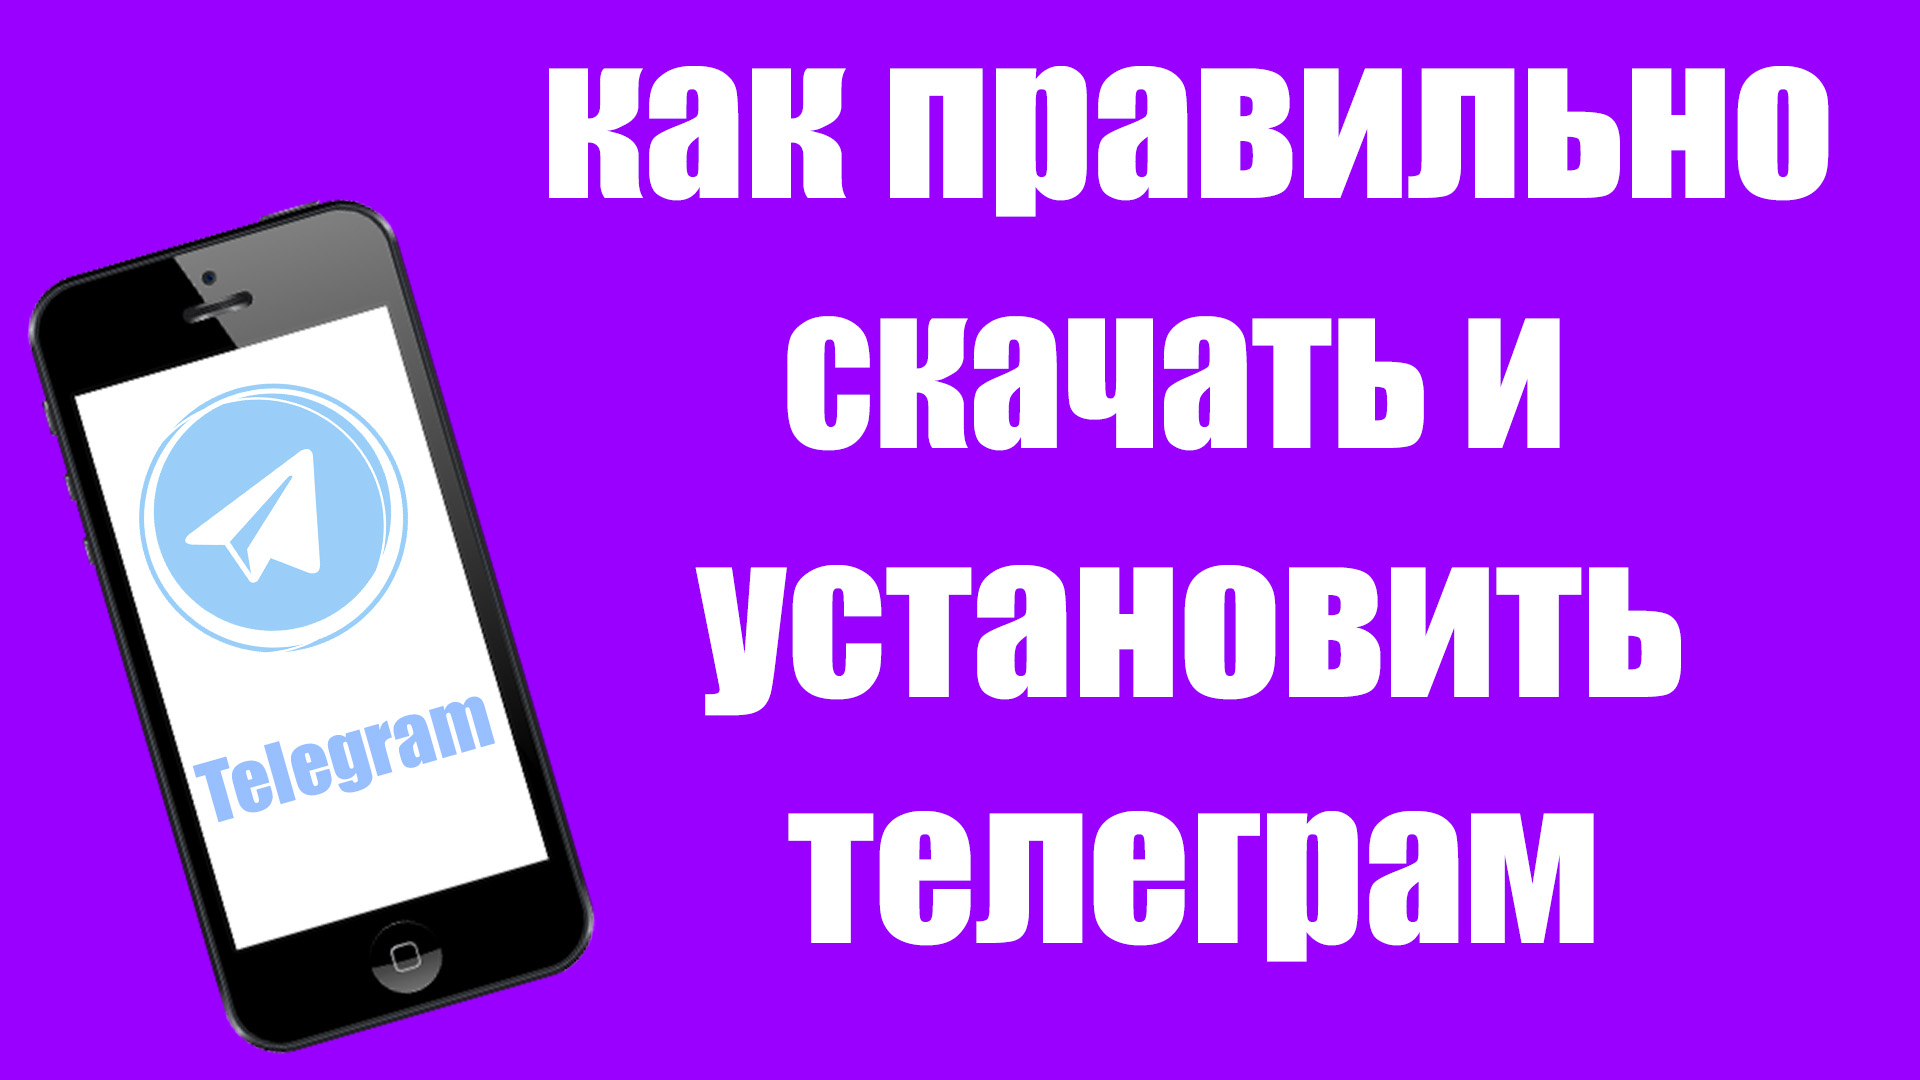 Телеграмм на русский перевести андроид на русский язык фото 27